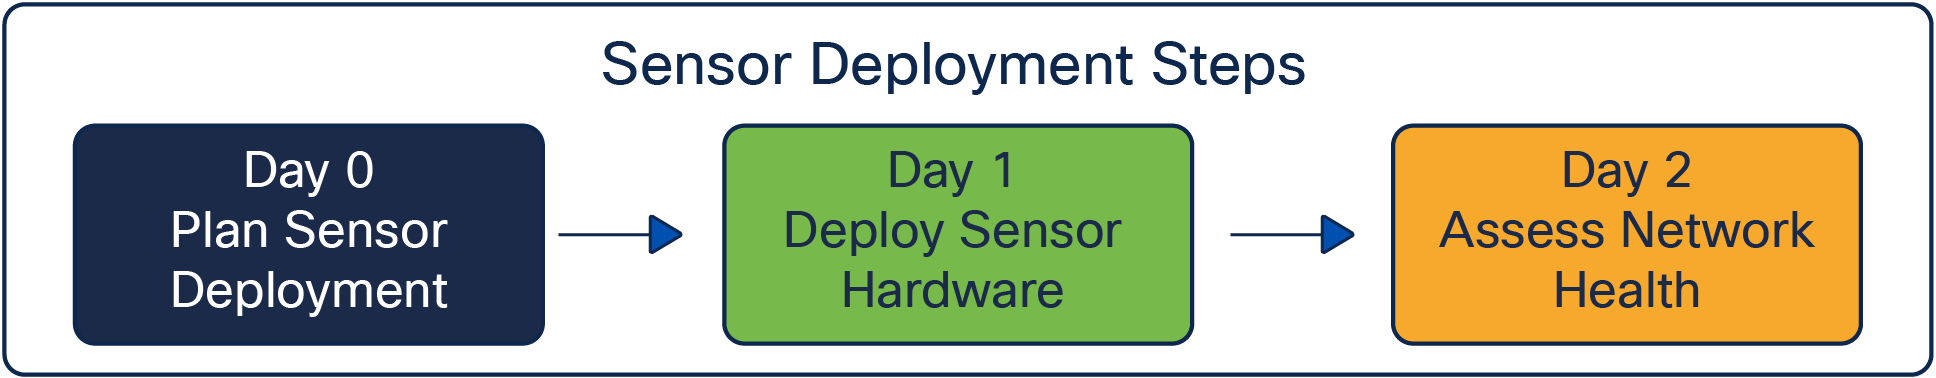 Sensor deployment steps